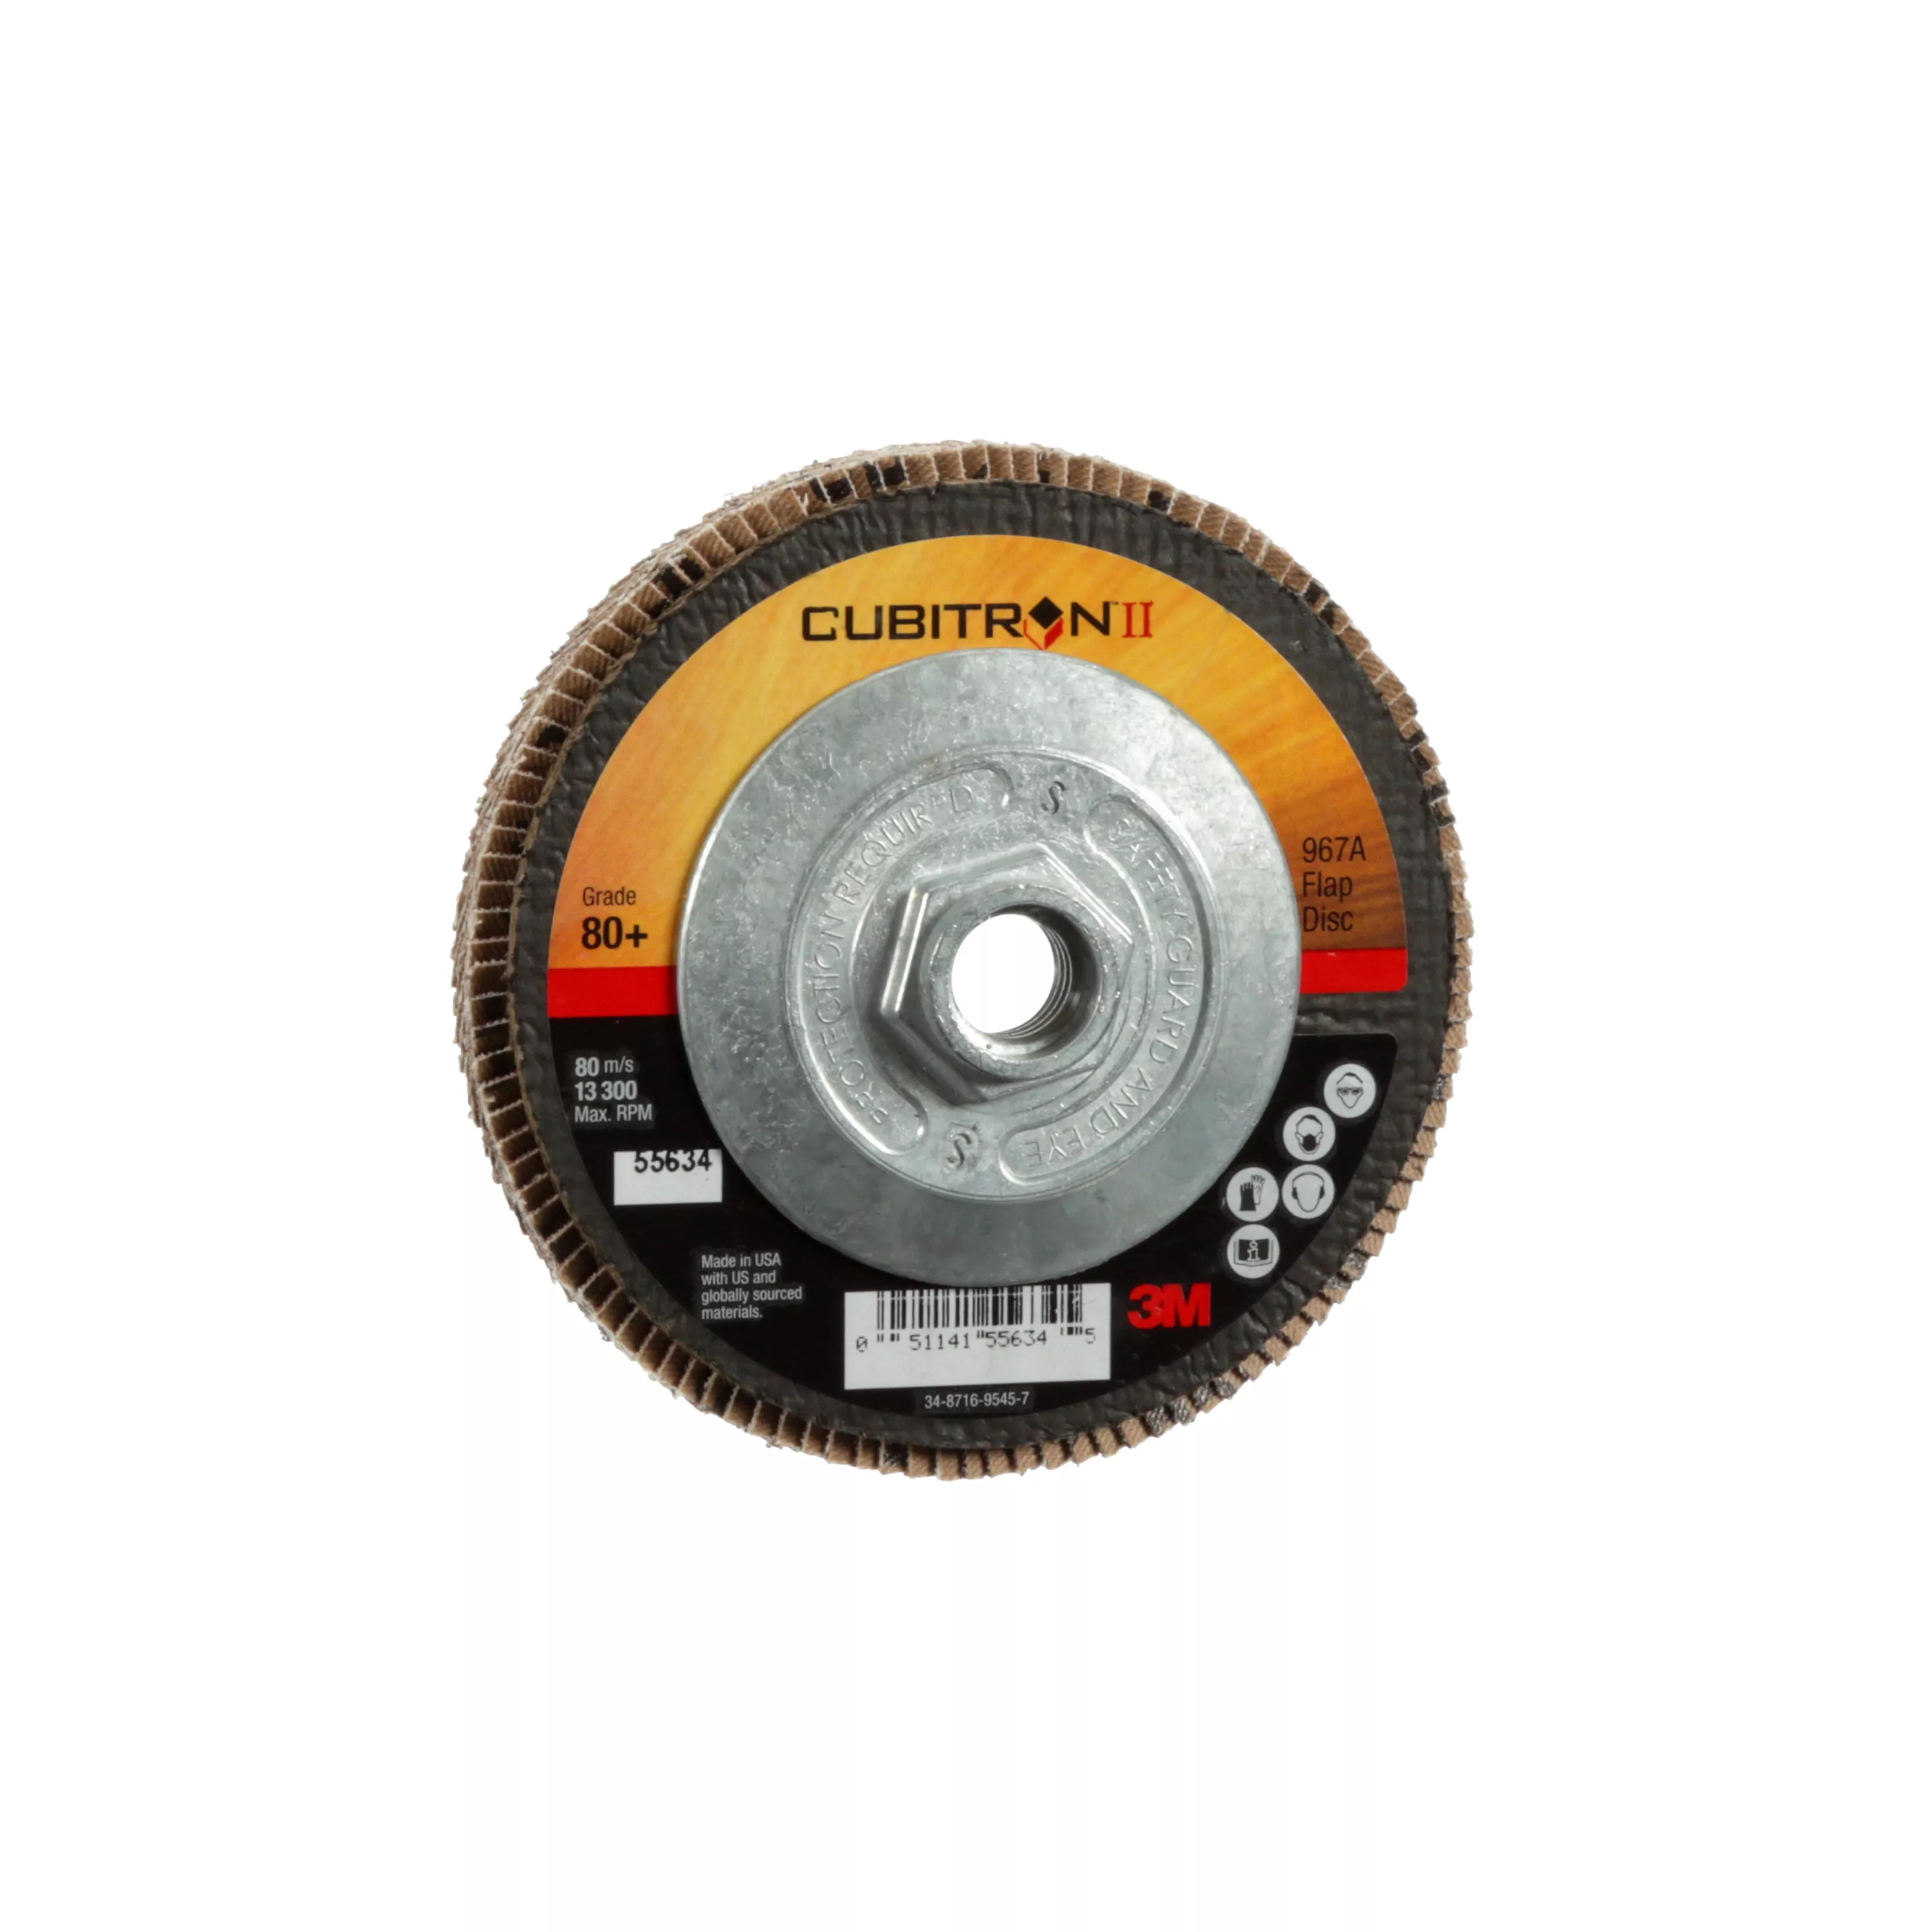 3M™ Cubitron™ II Flap Disc 967A, 80+, T27 Quick Change, 4-1/2 in x
5/8